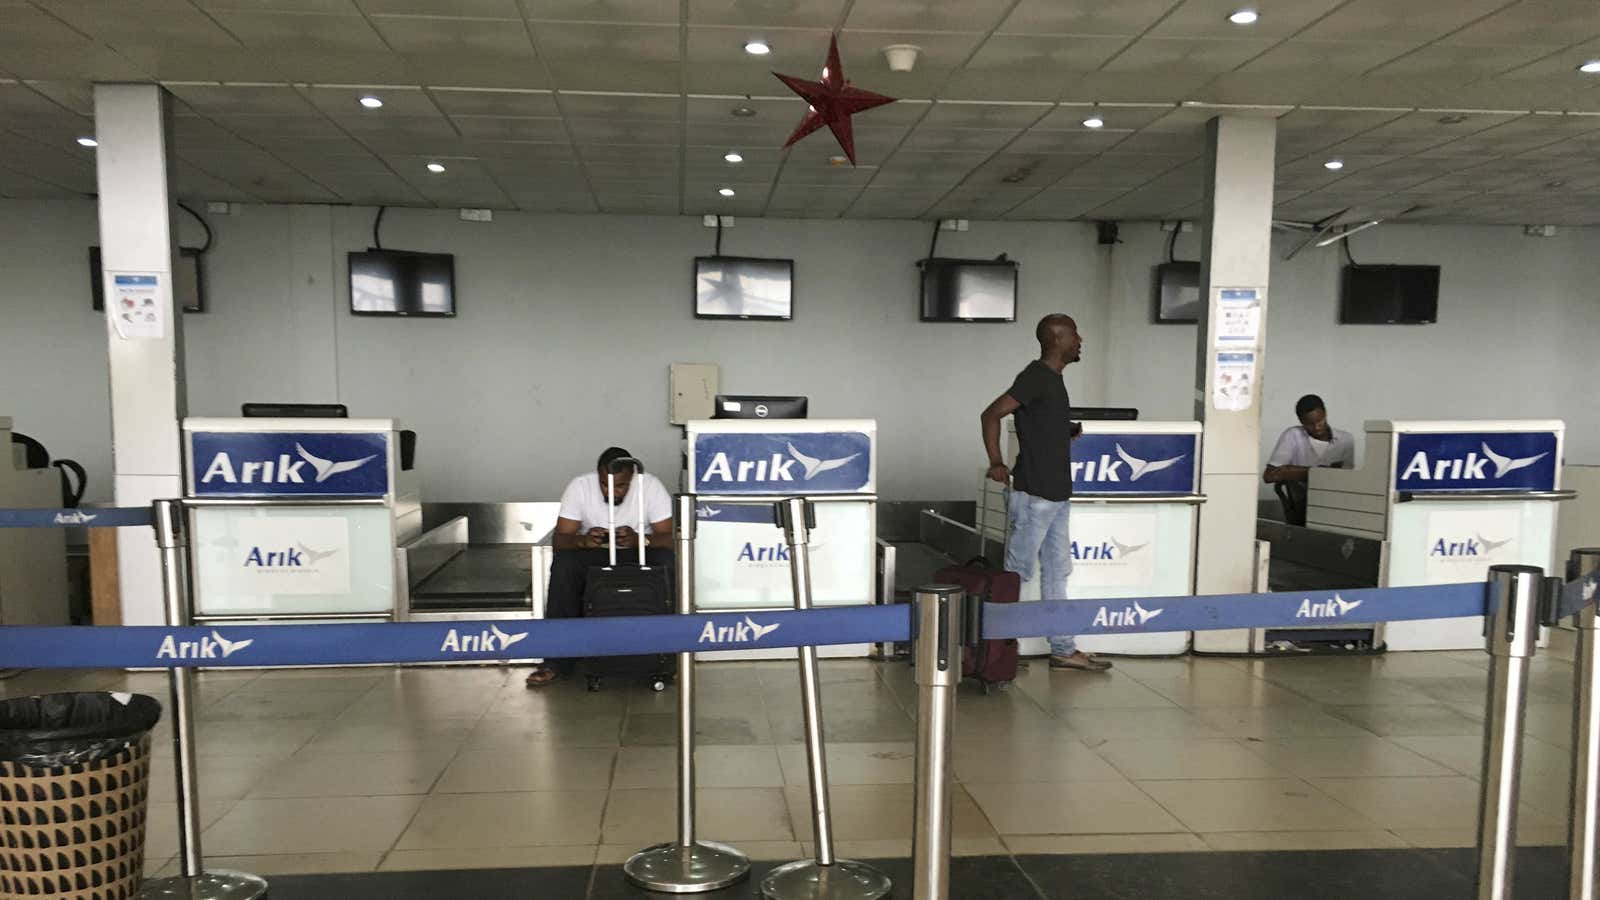 Arik Air’s business has struggled in recent months.